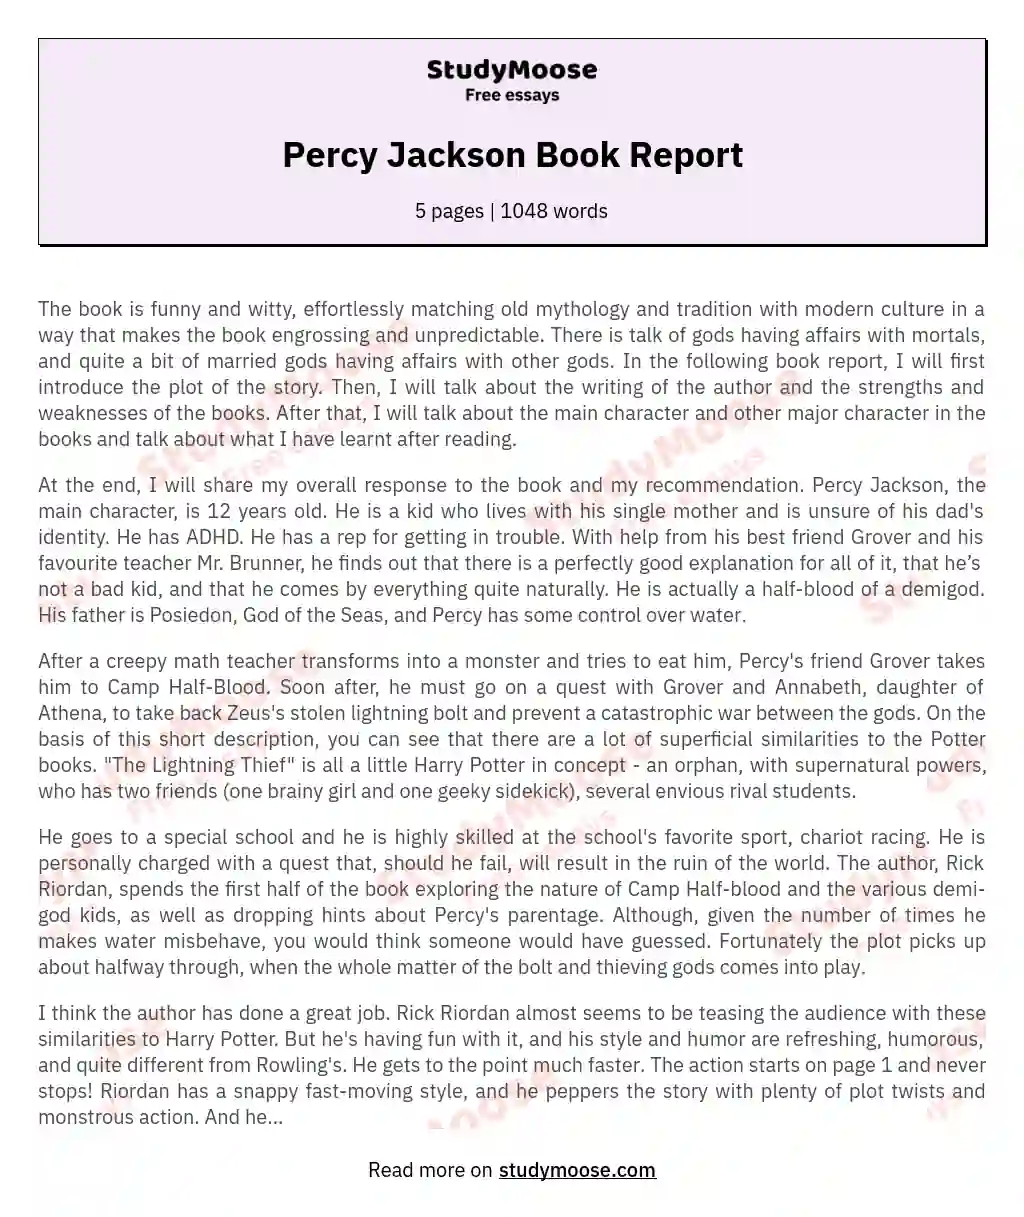 Percy Jackson Book Report essay